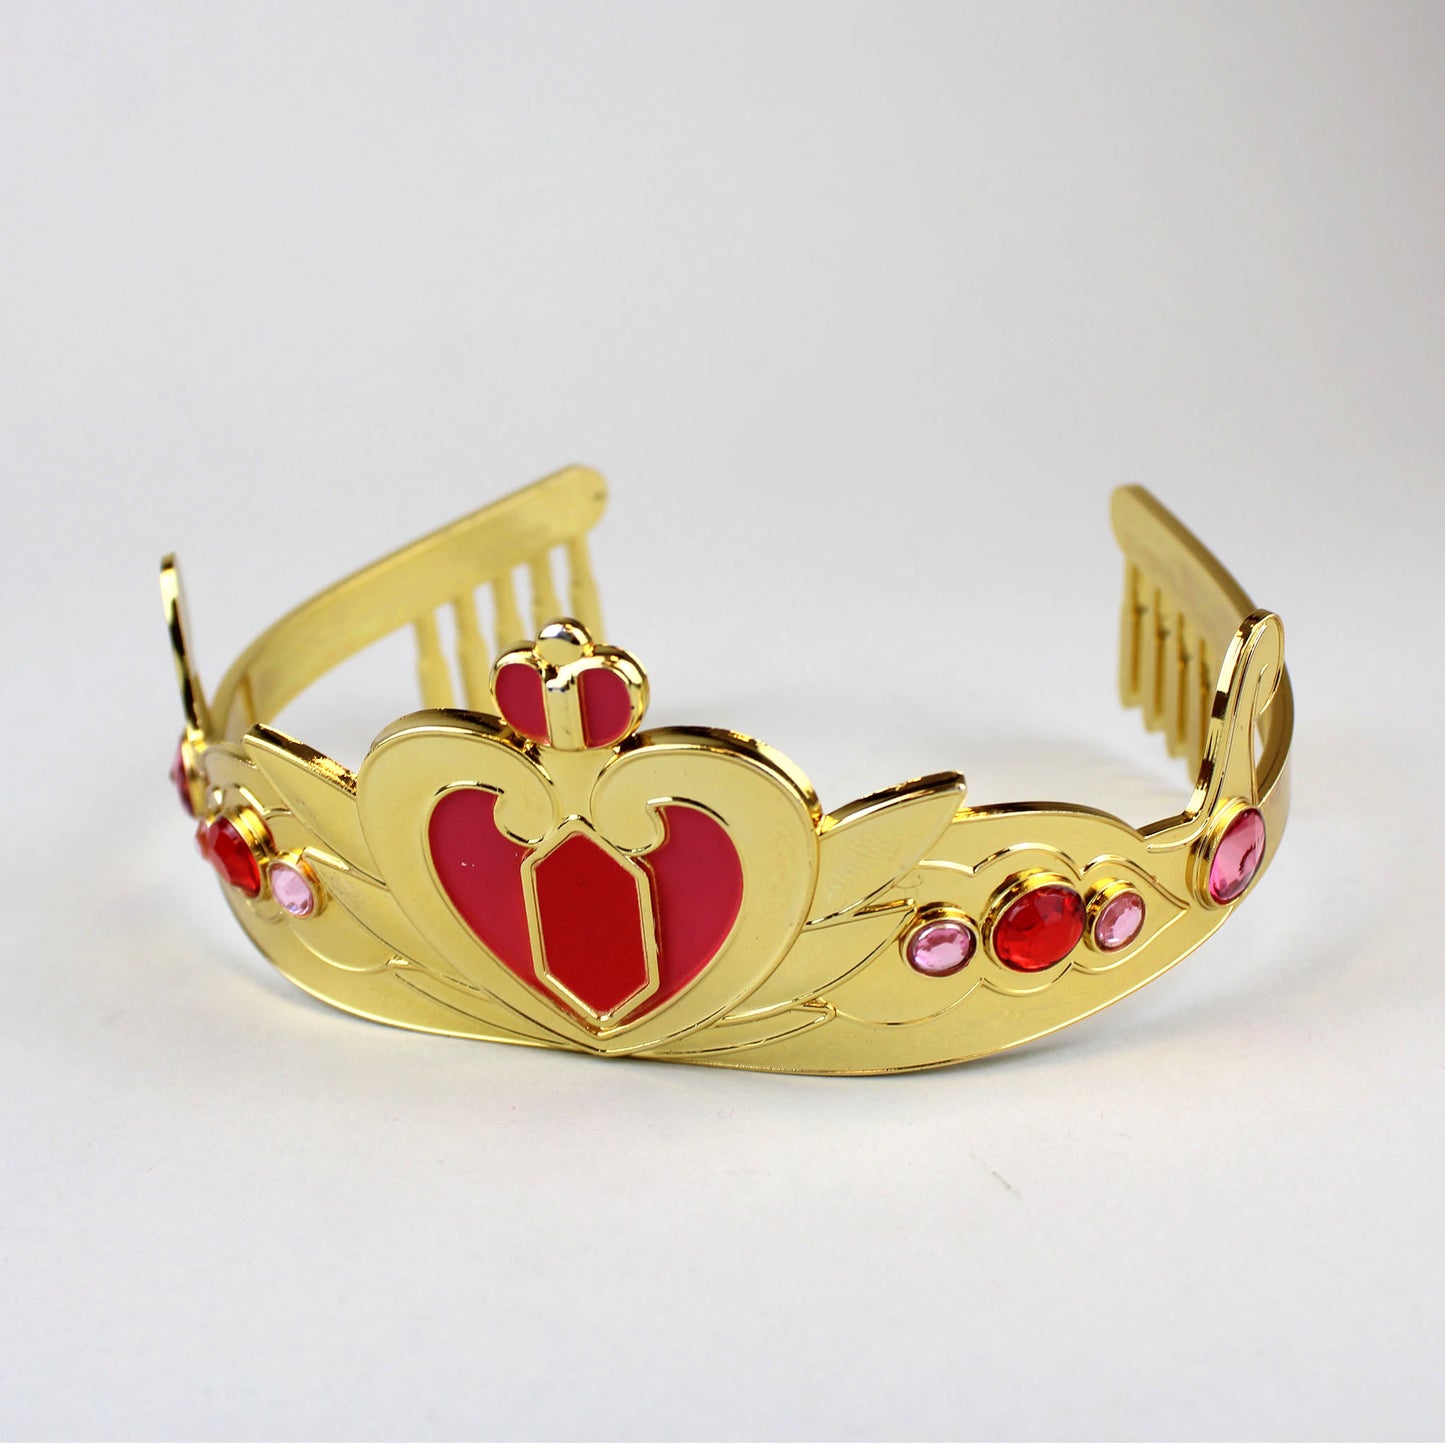 Queen Serenity (Sailor Moon R) Child-Size Cosplay Crown Headband